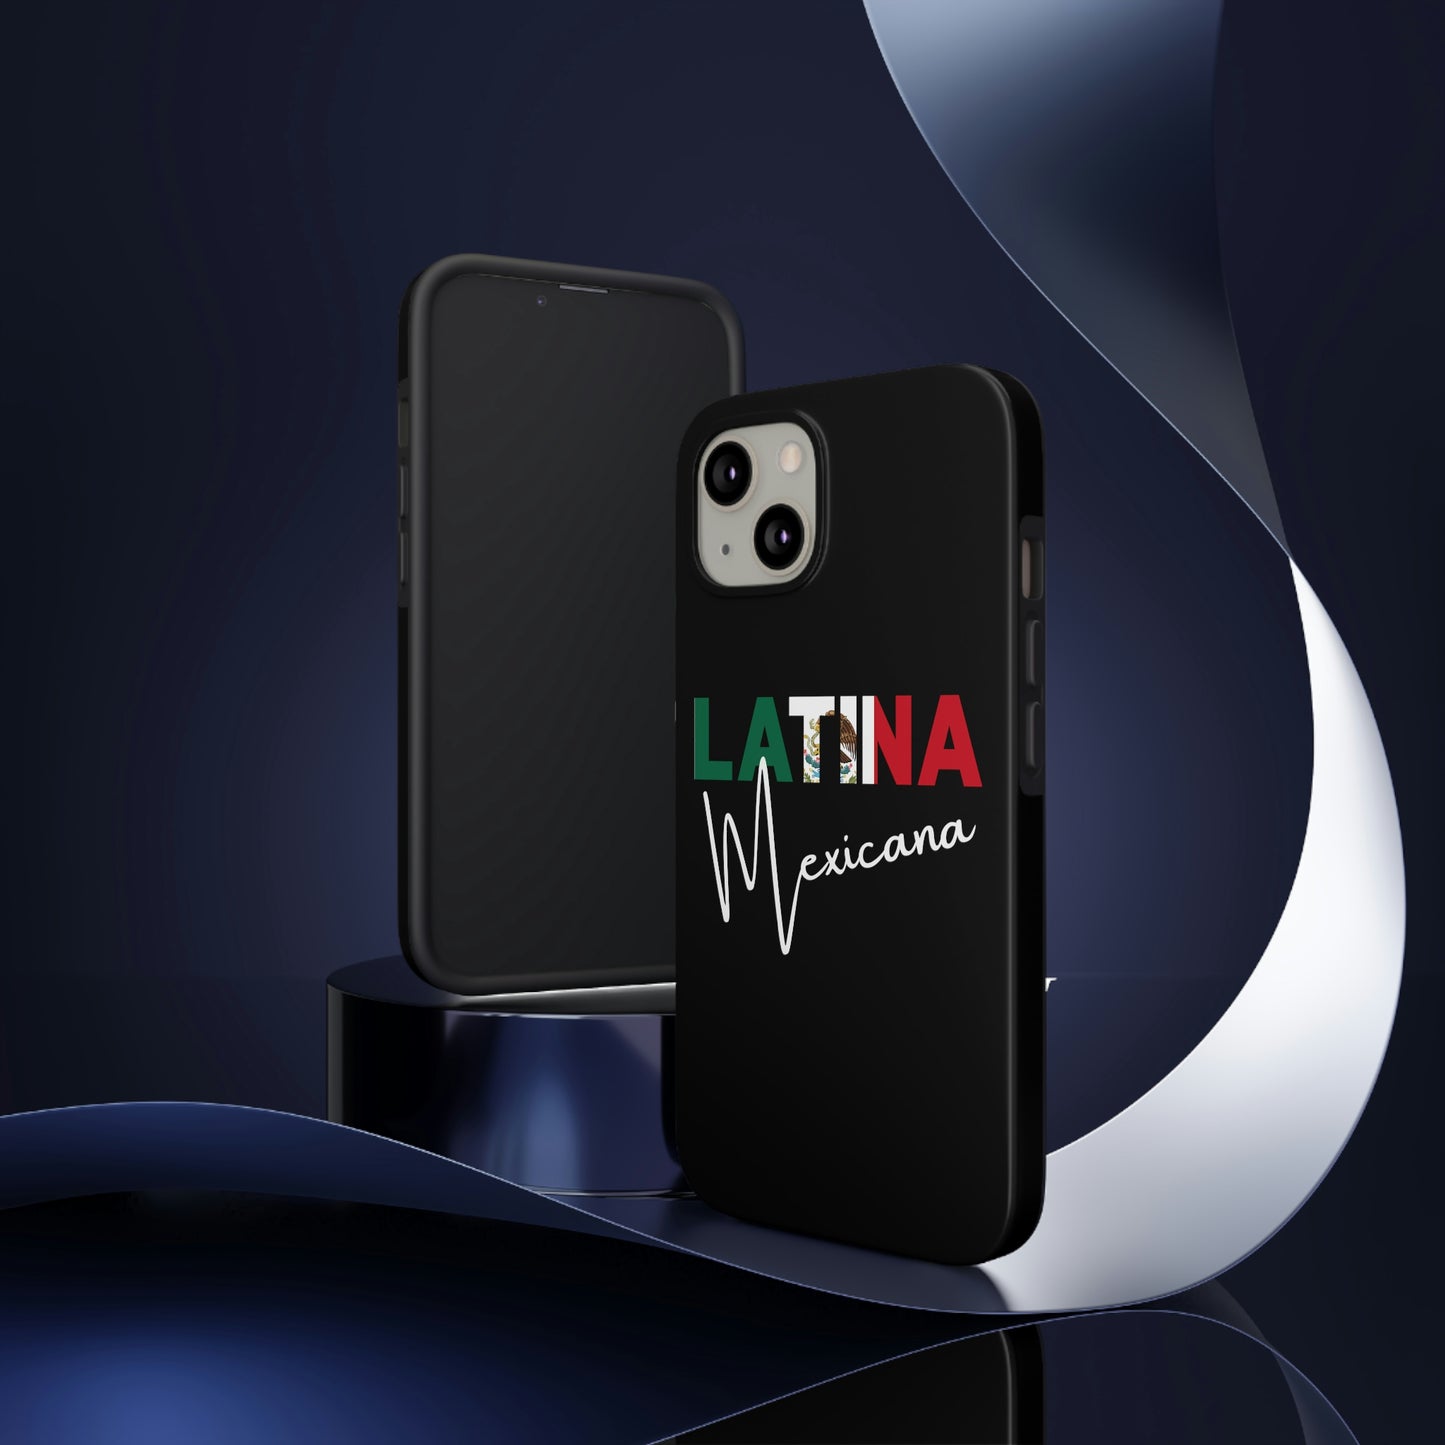 Latina Mexicana, iPhone Hard Case